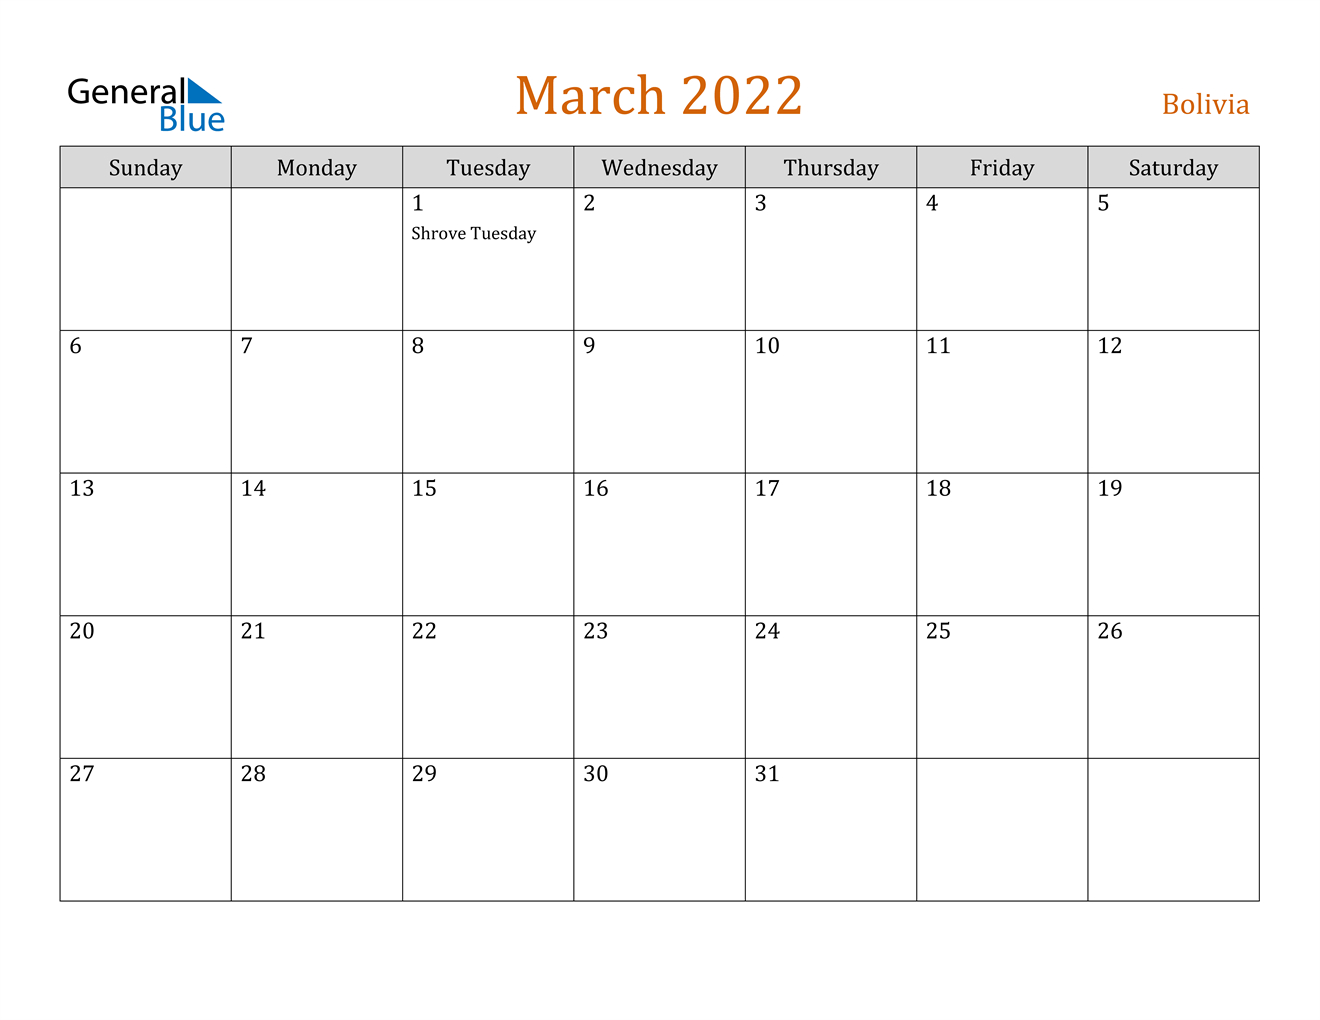 Collect March 2022 In Arabic Calendar